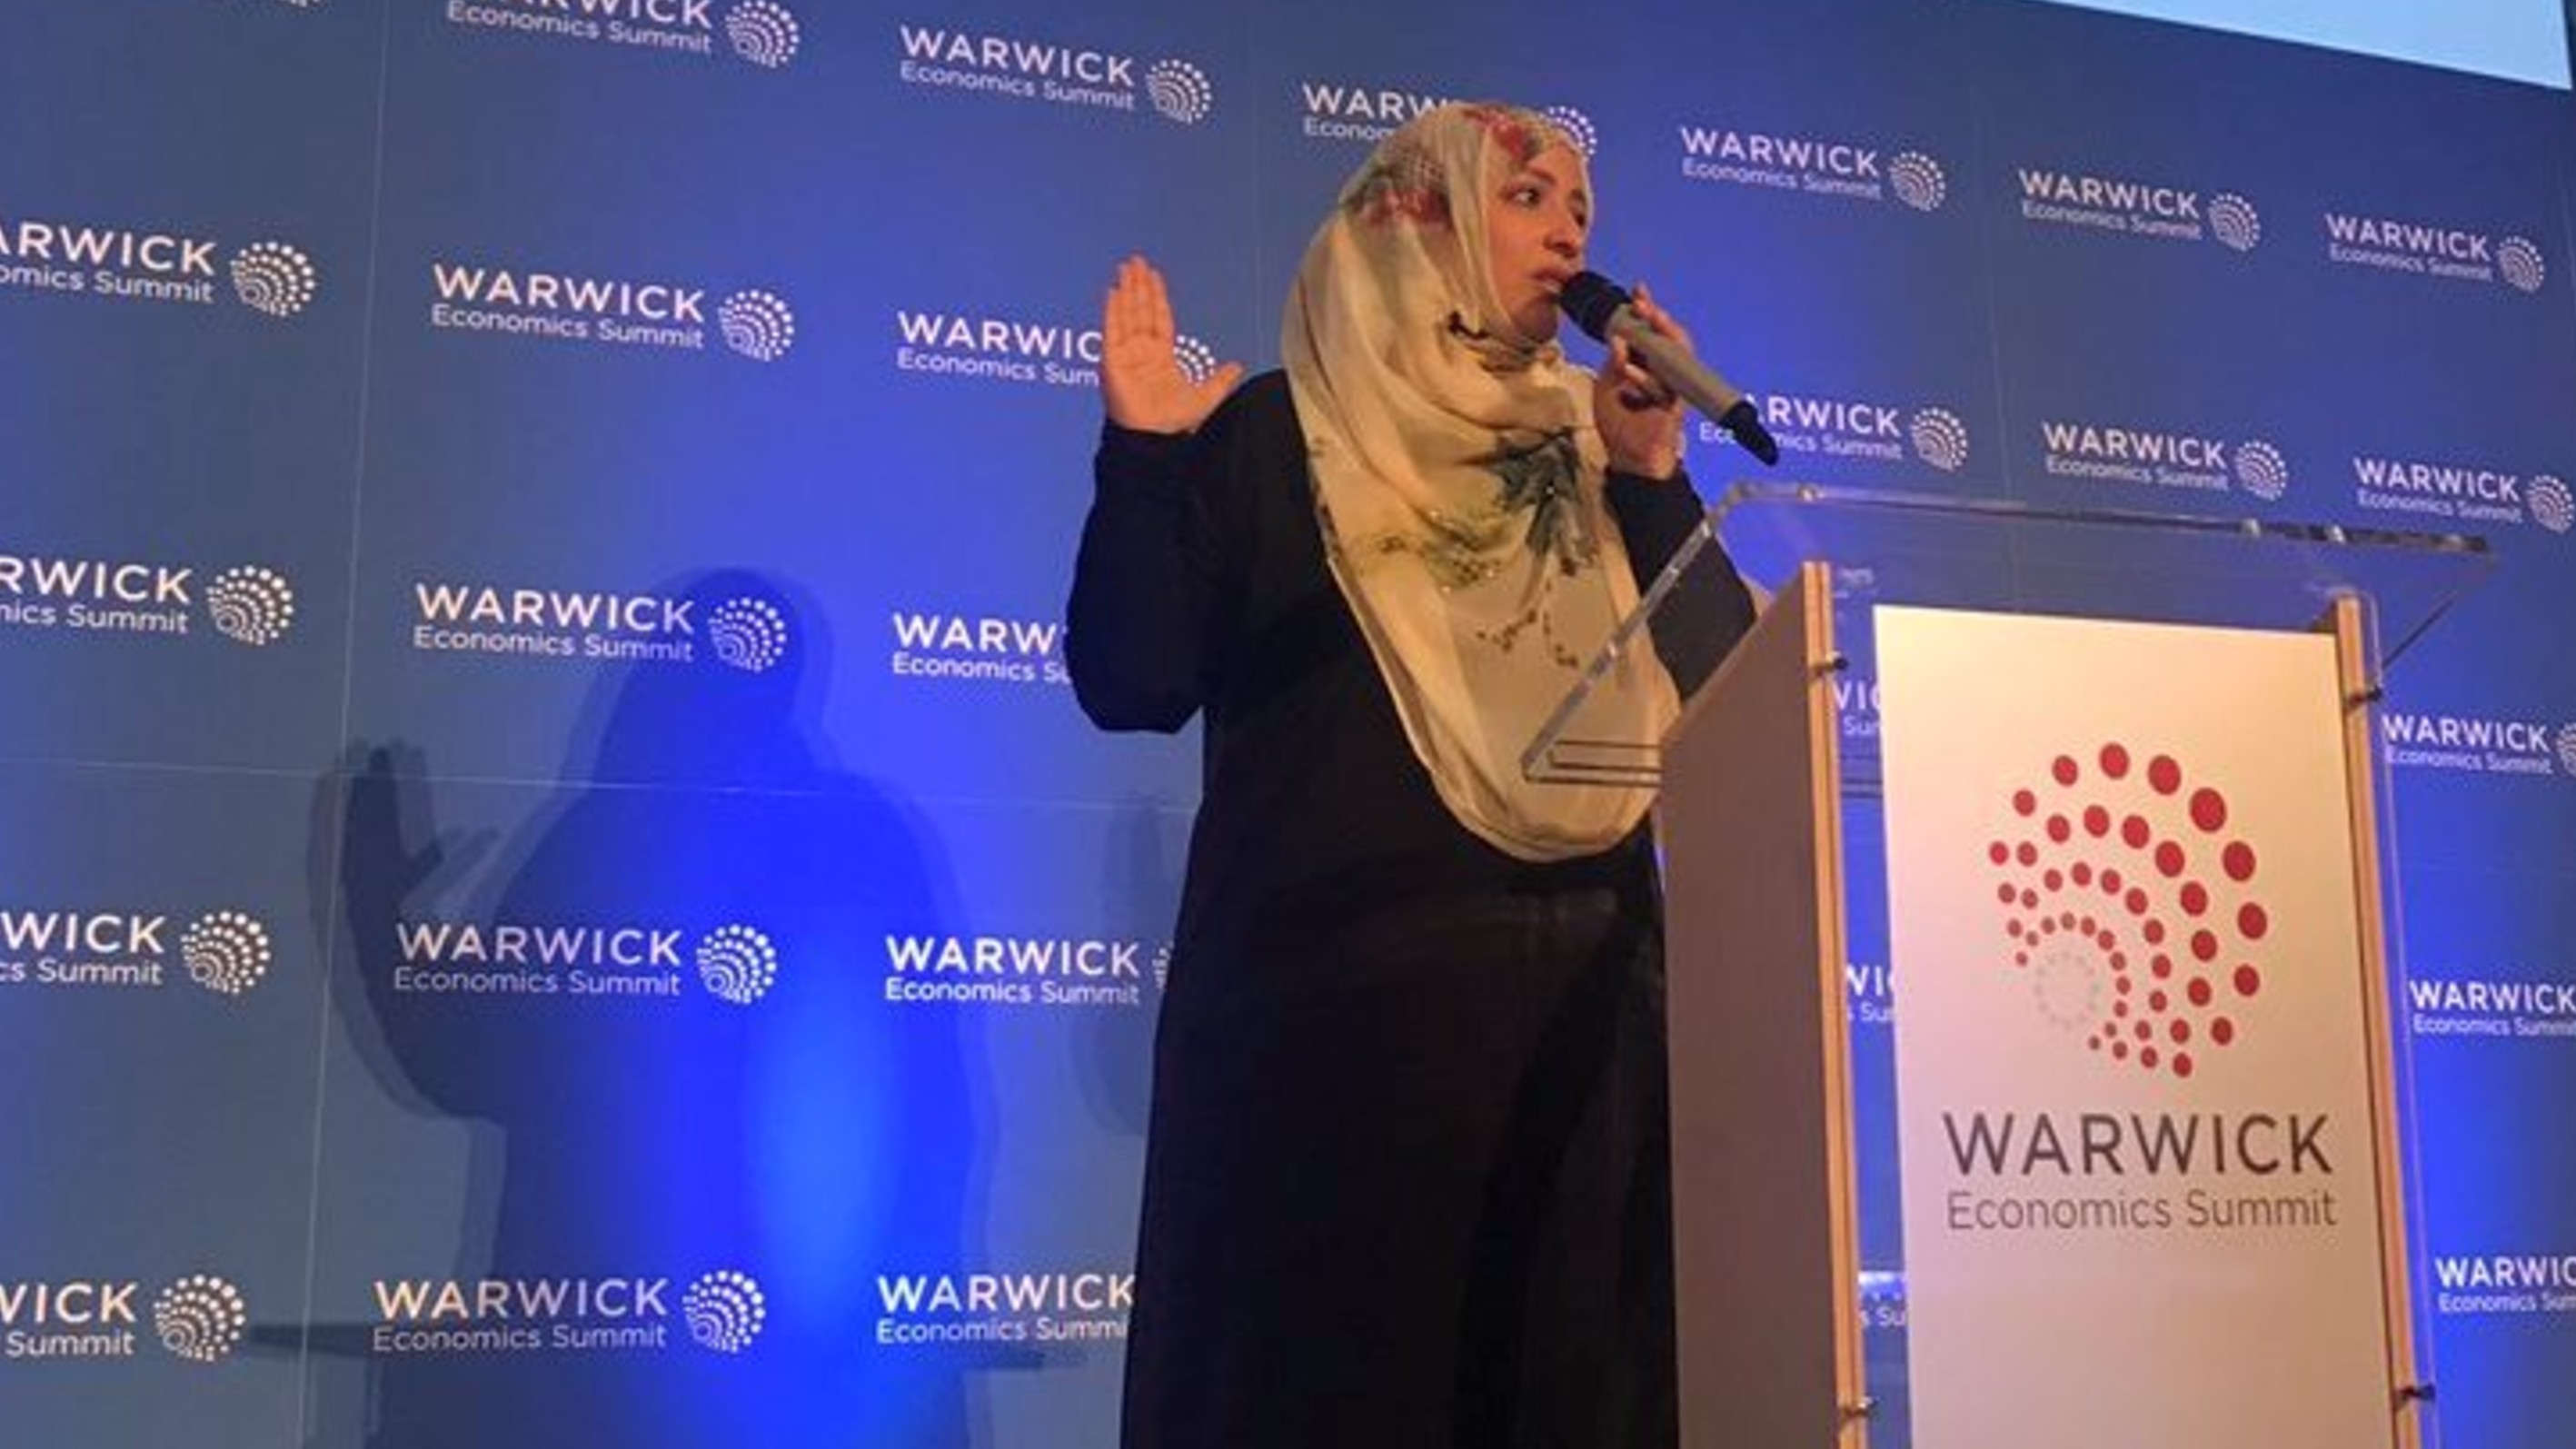 Nobel Peace Laureate’s Speech at Warwick Economics Summit 2018 in Birmingham - British